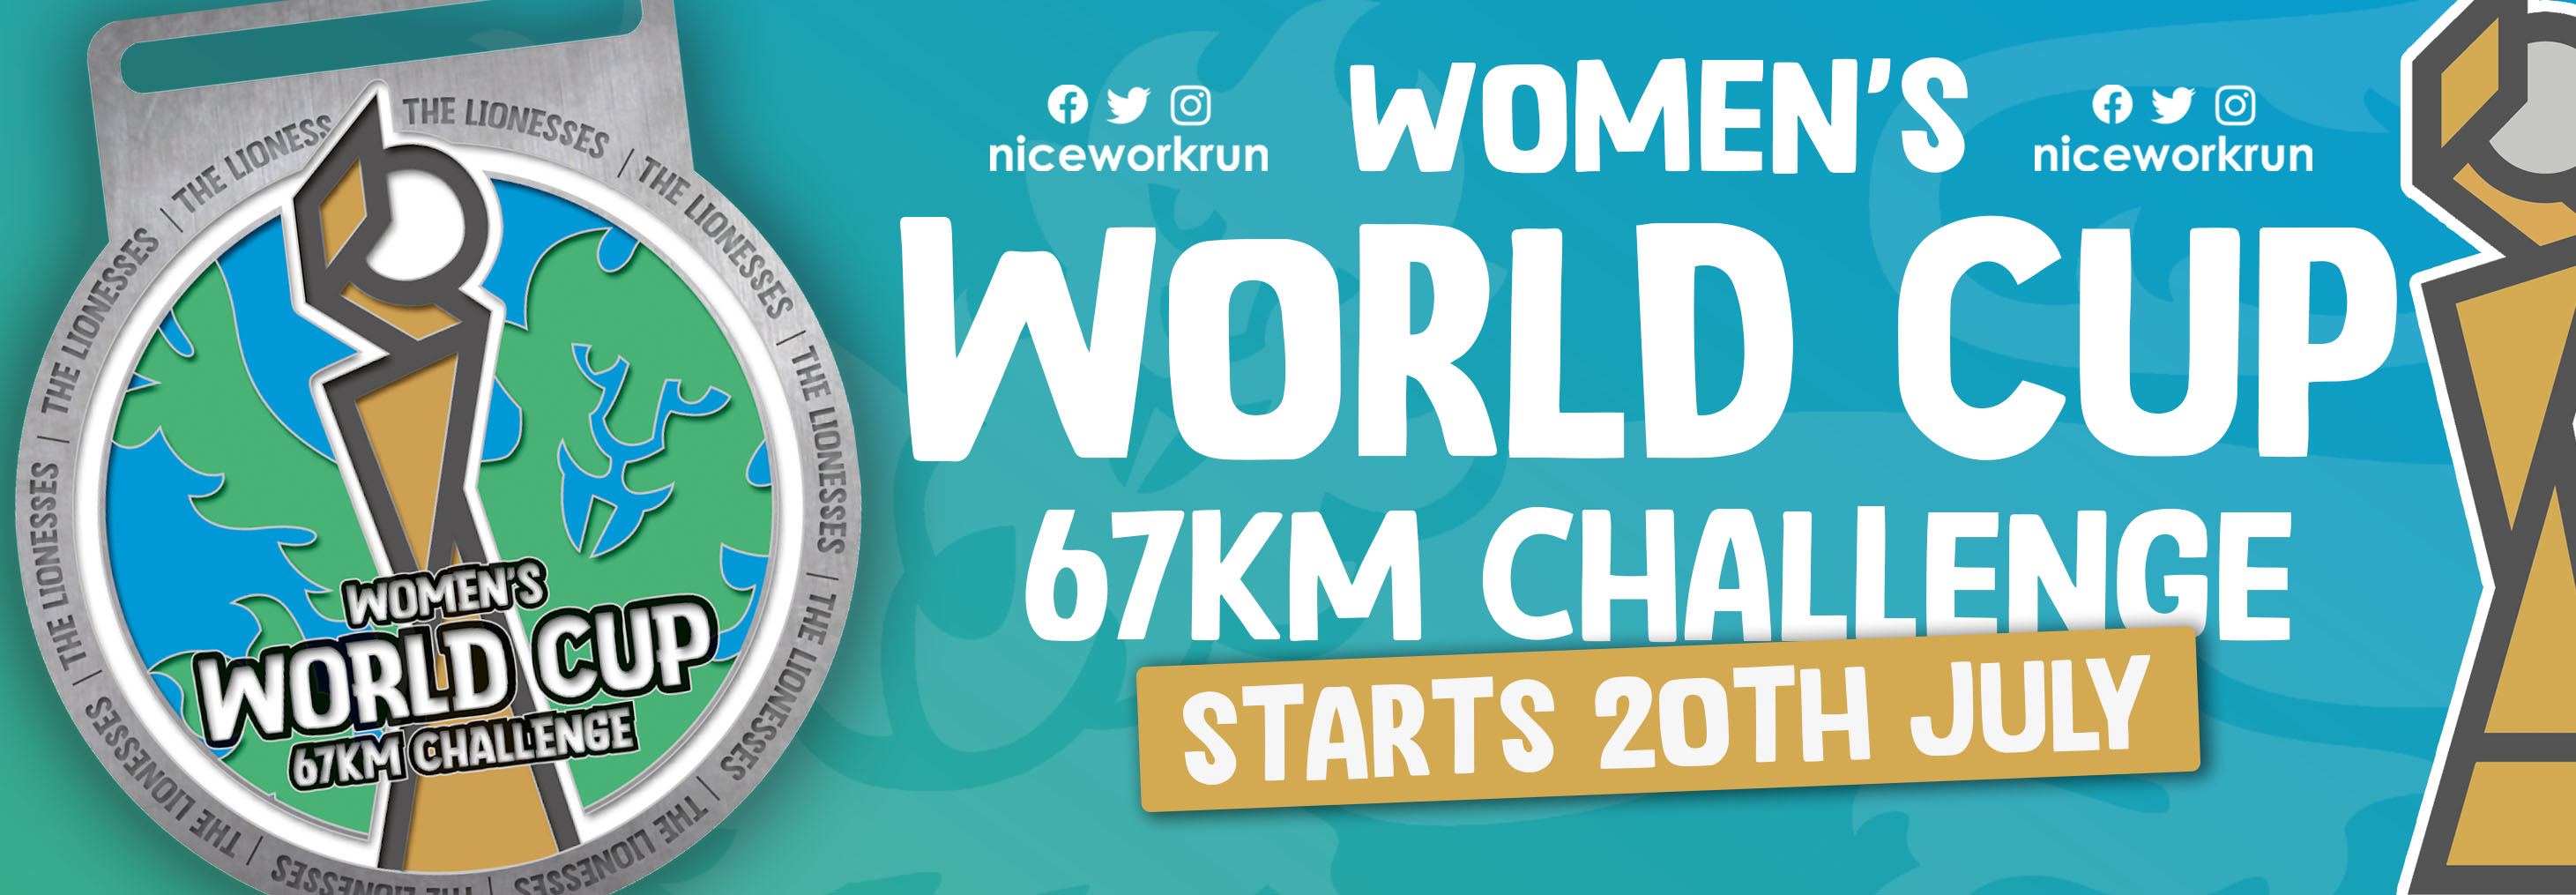 Women's World Cup 67km Challenge